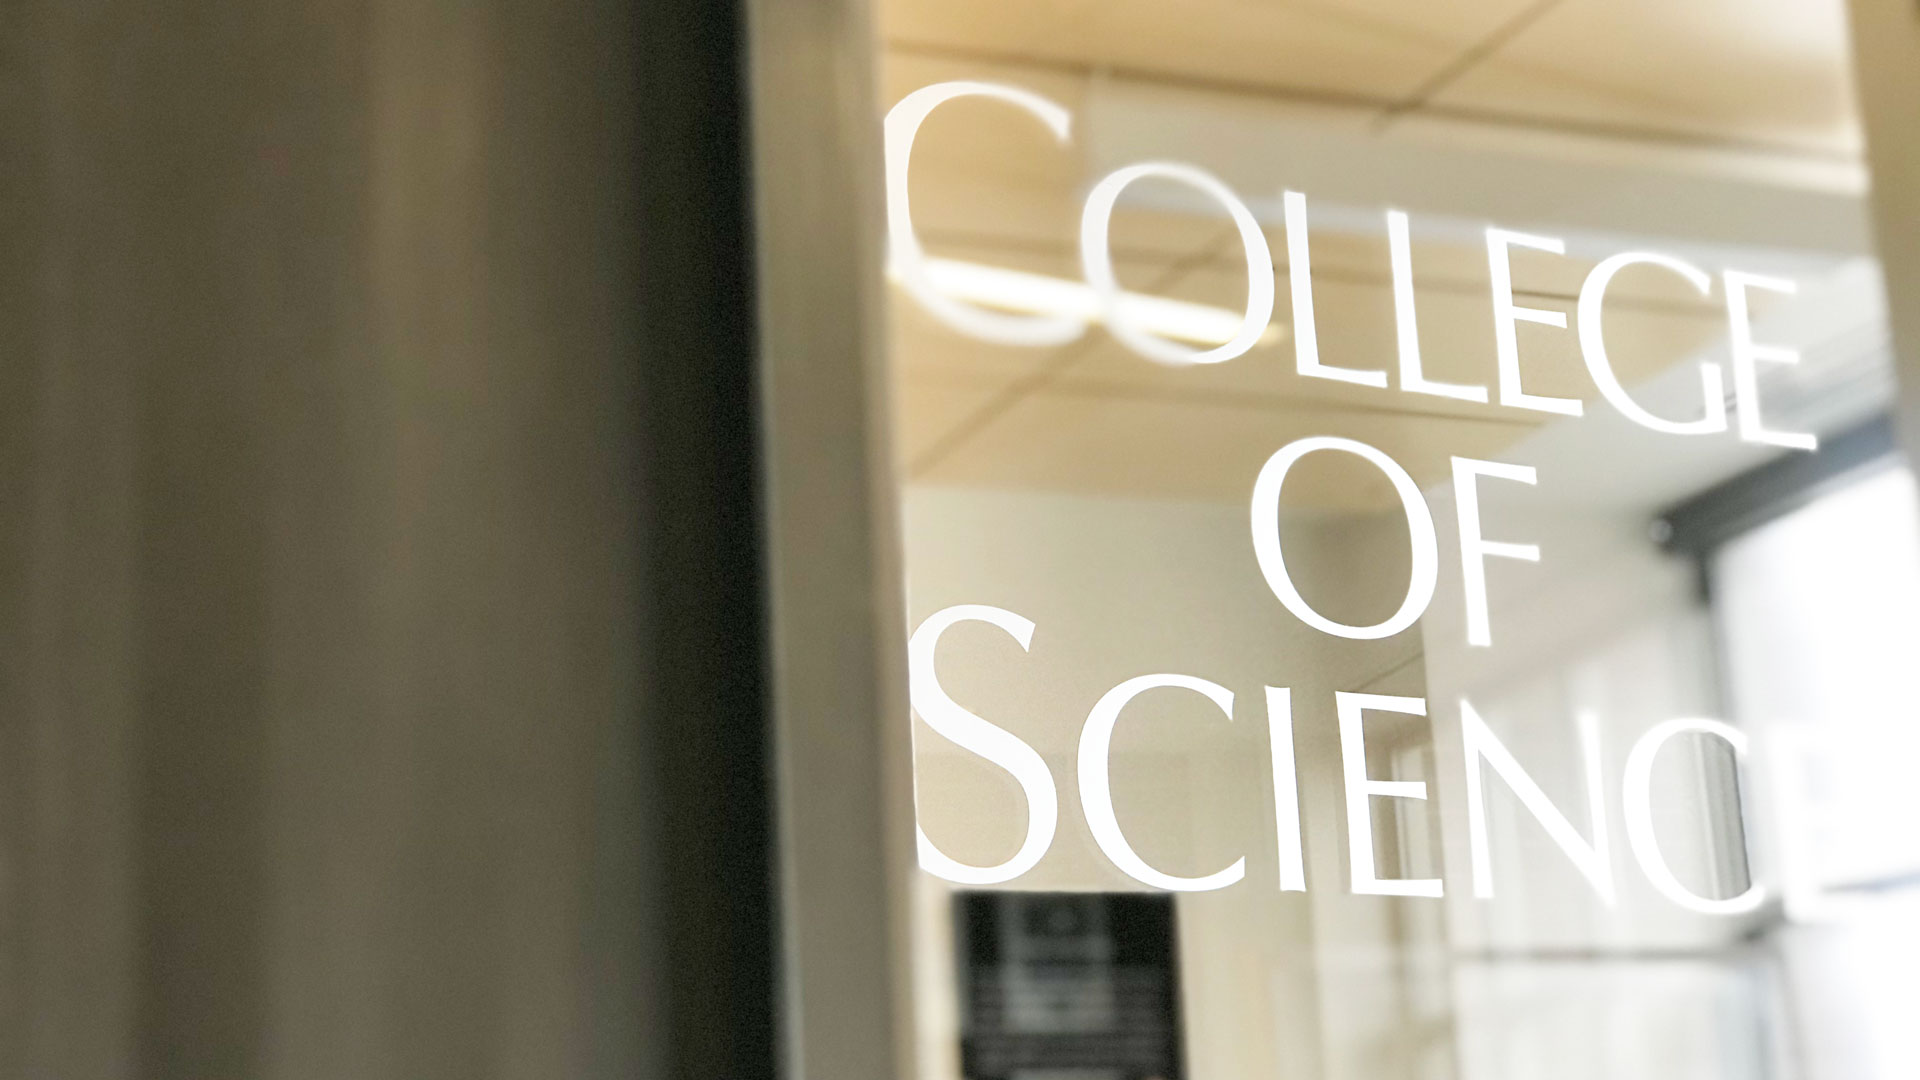 Abstract image of College of Science Dean's office door.